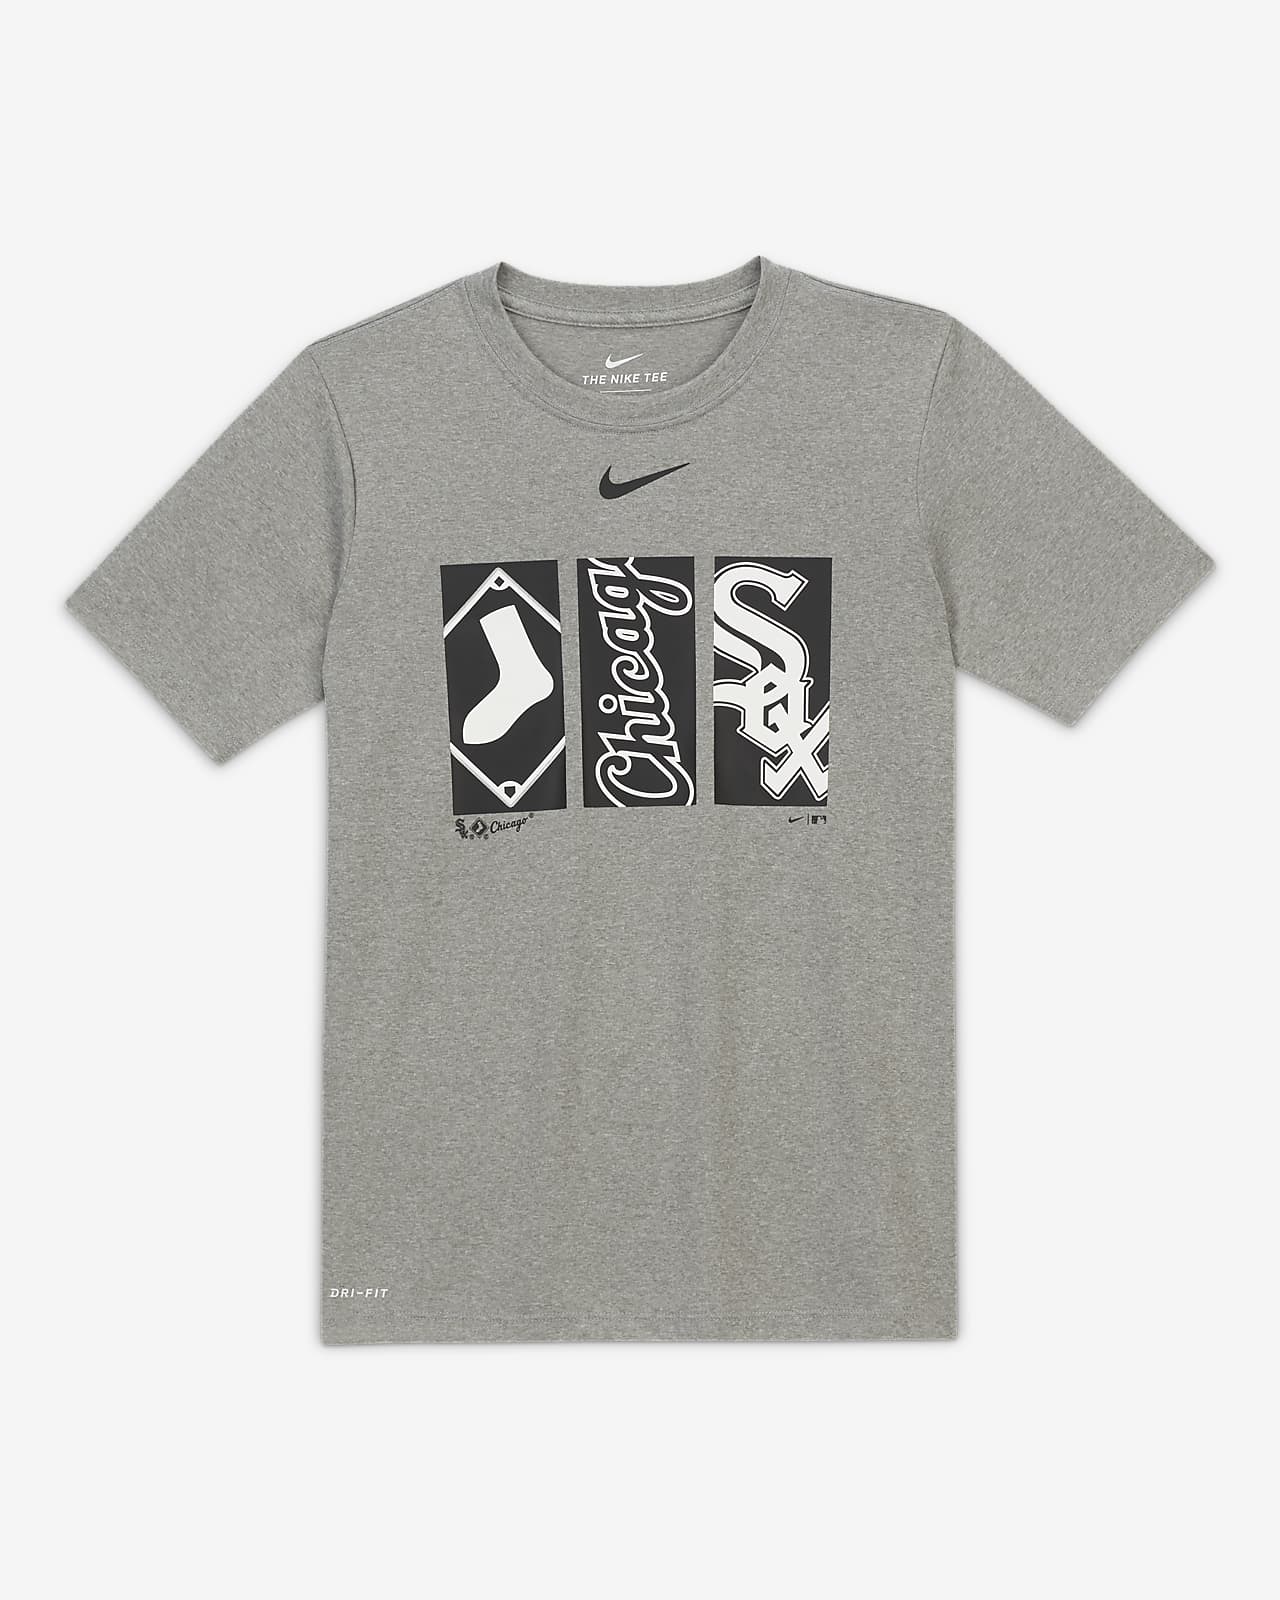 Nike Legend (MLB White Sox) Big Kids' (Boys') T-Shirt.